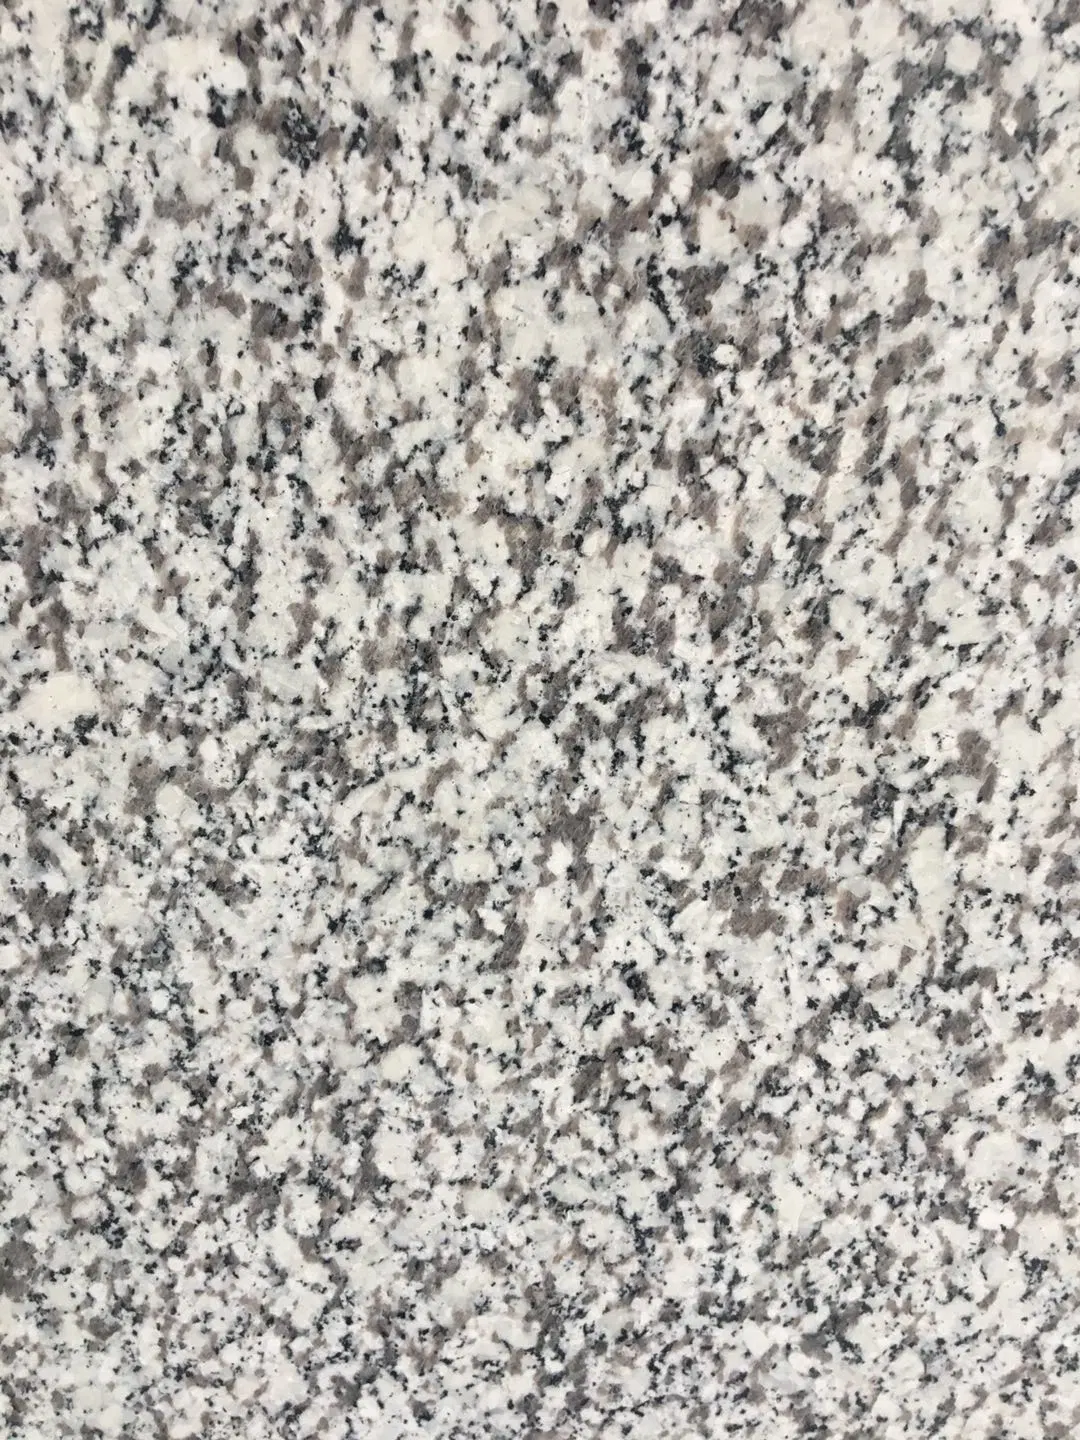 Polished China Stone Blue Granite Price Granite Slab for Countertops